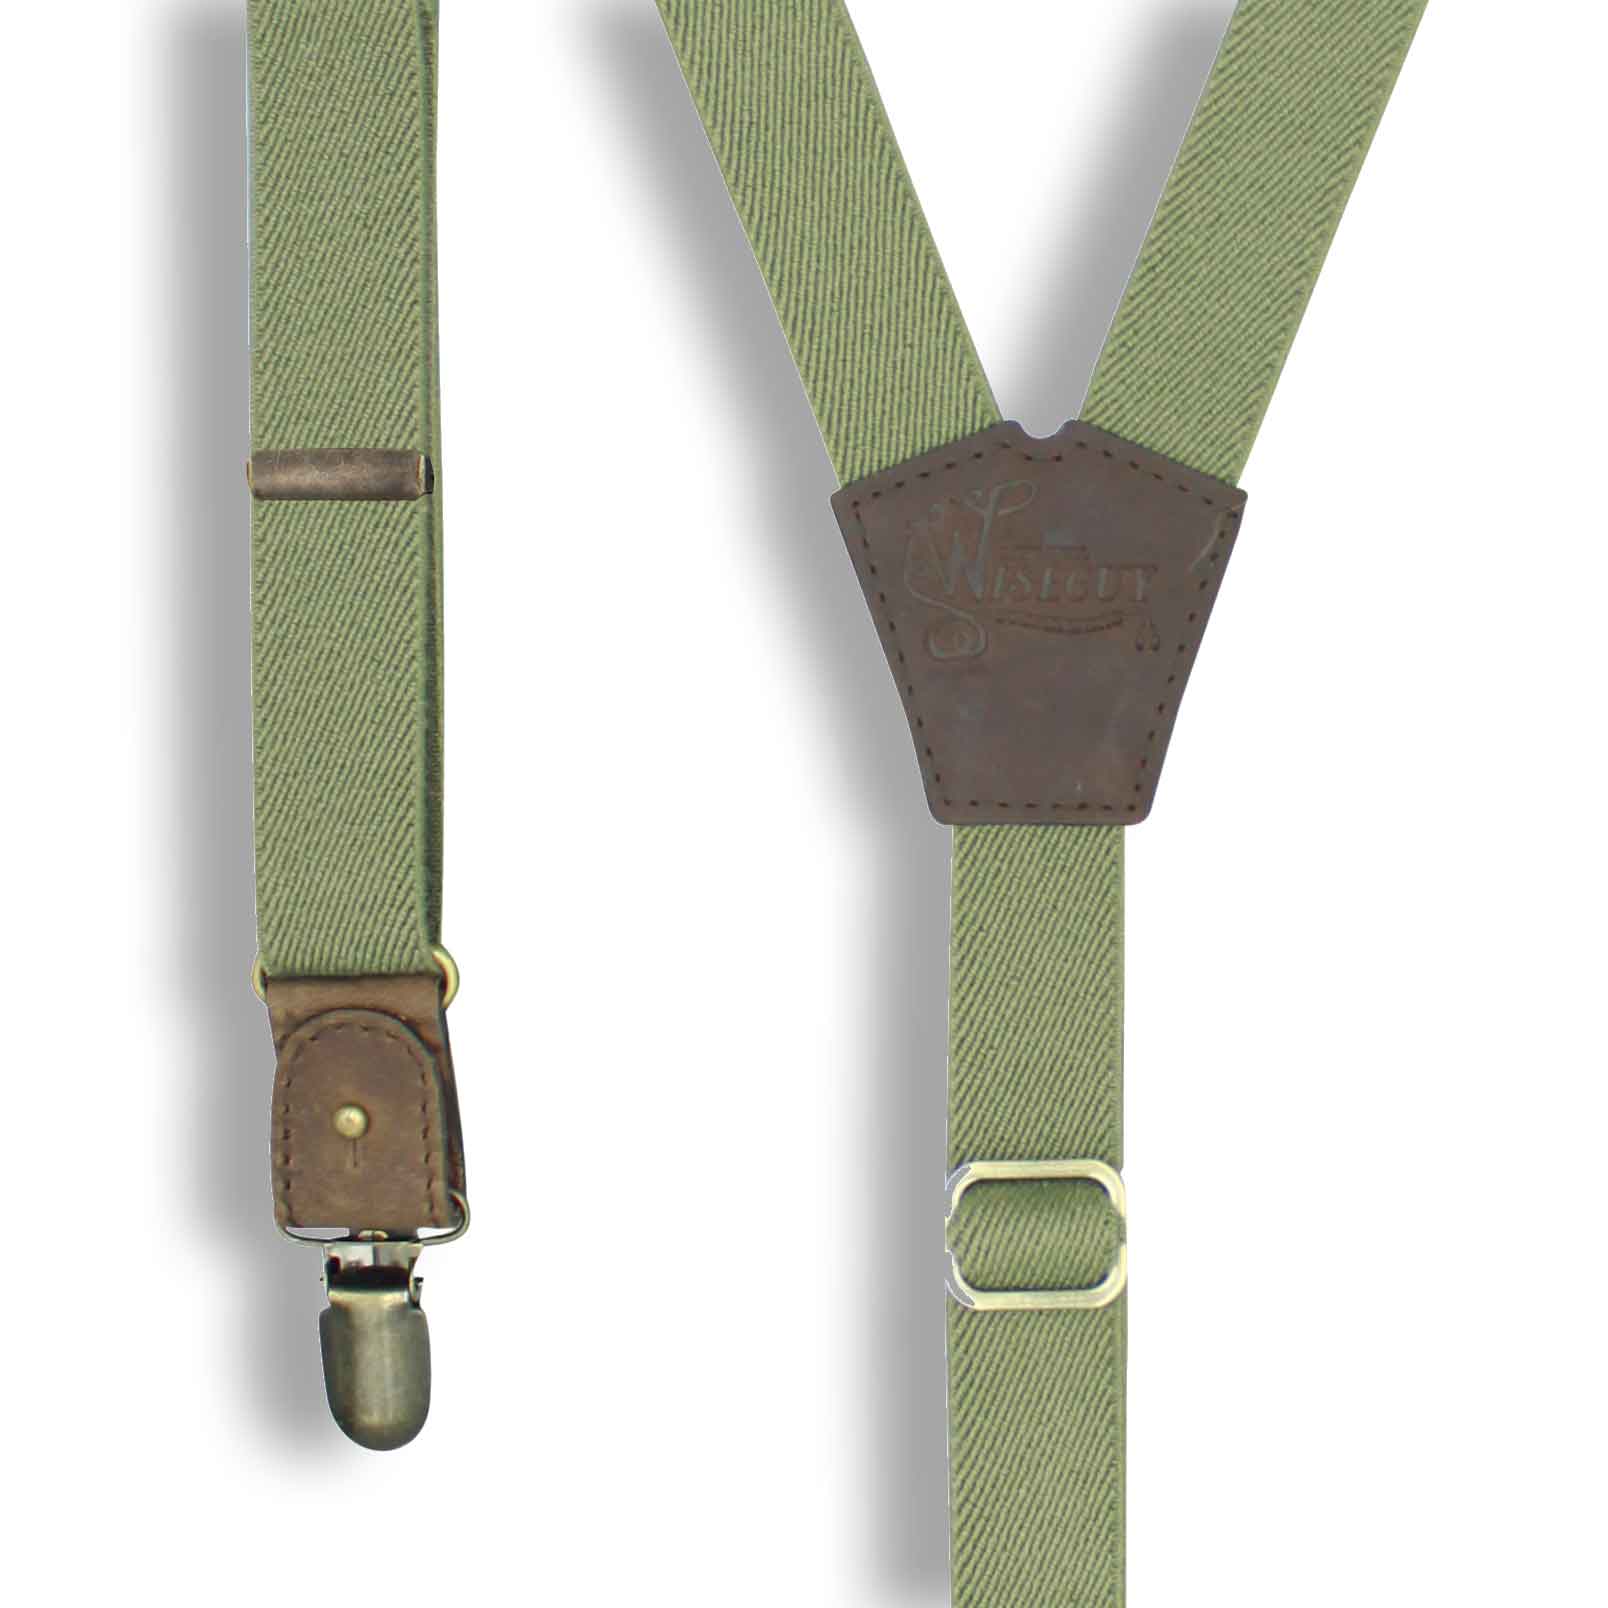 Khaki Green Suspenders slim straps (1 inch/2.54 cm) - Wiseguy Suspenders